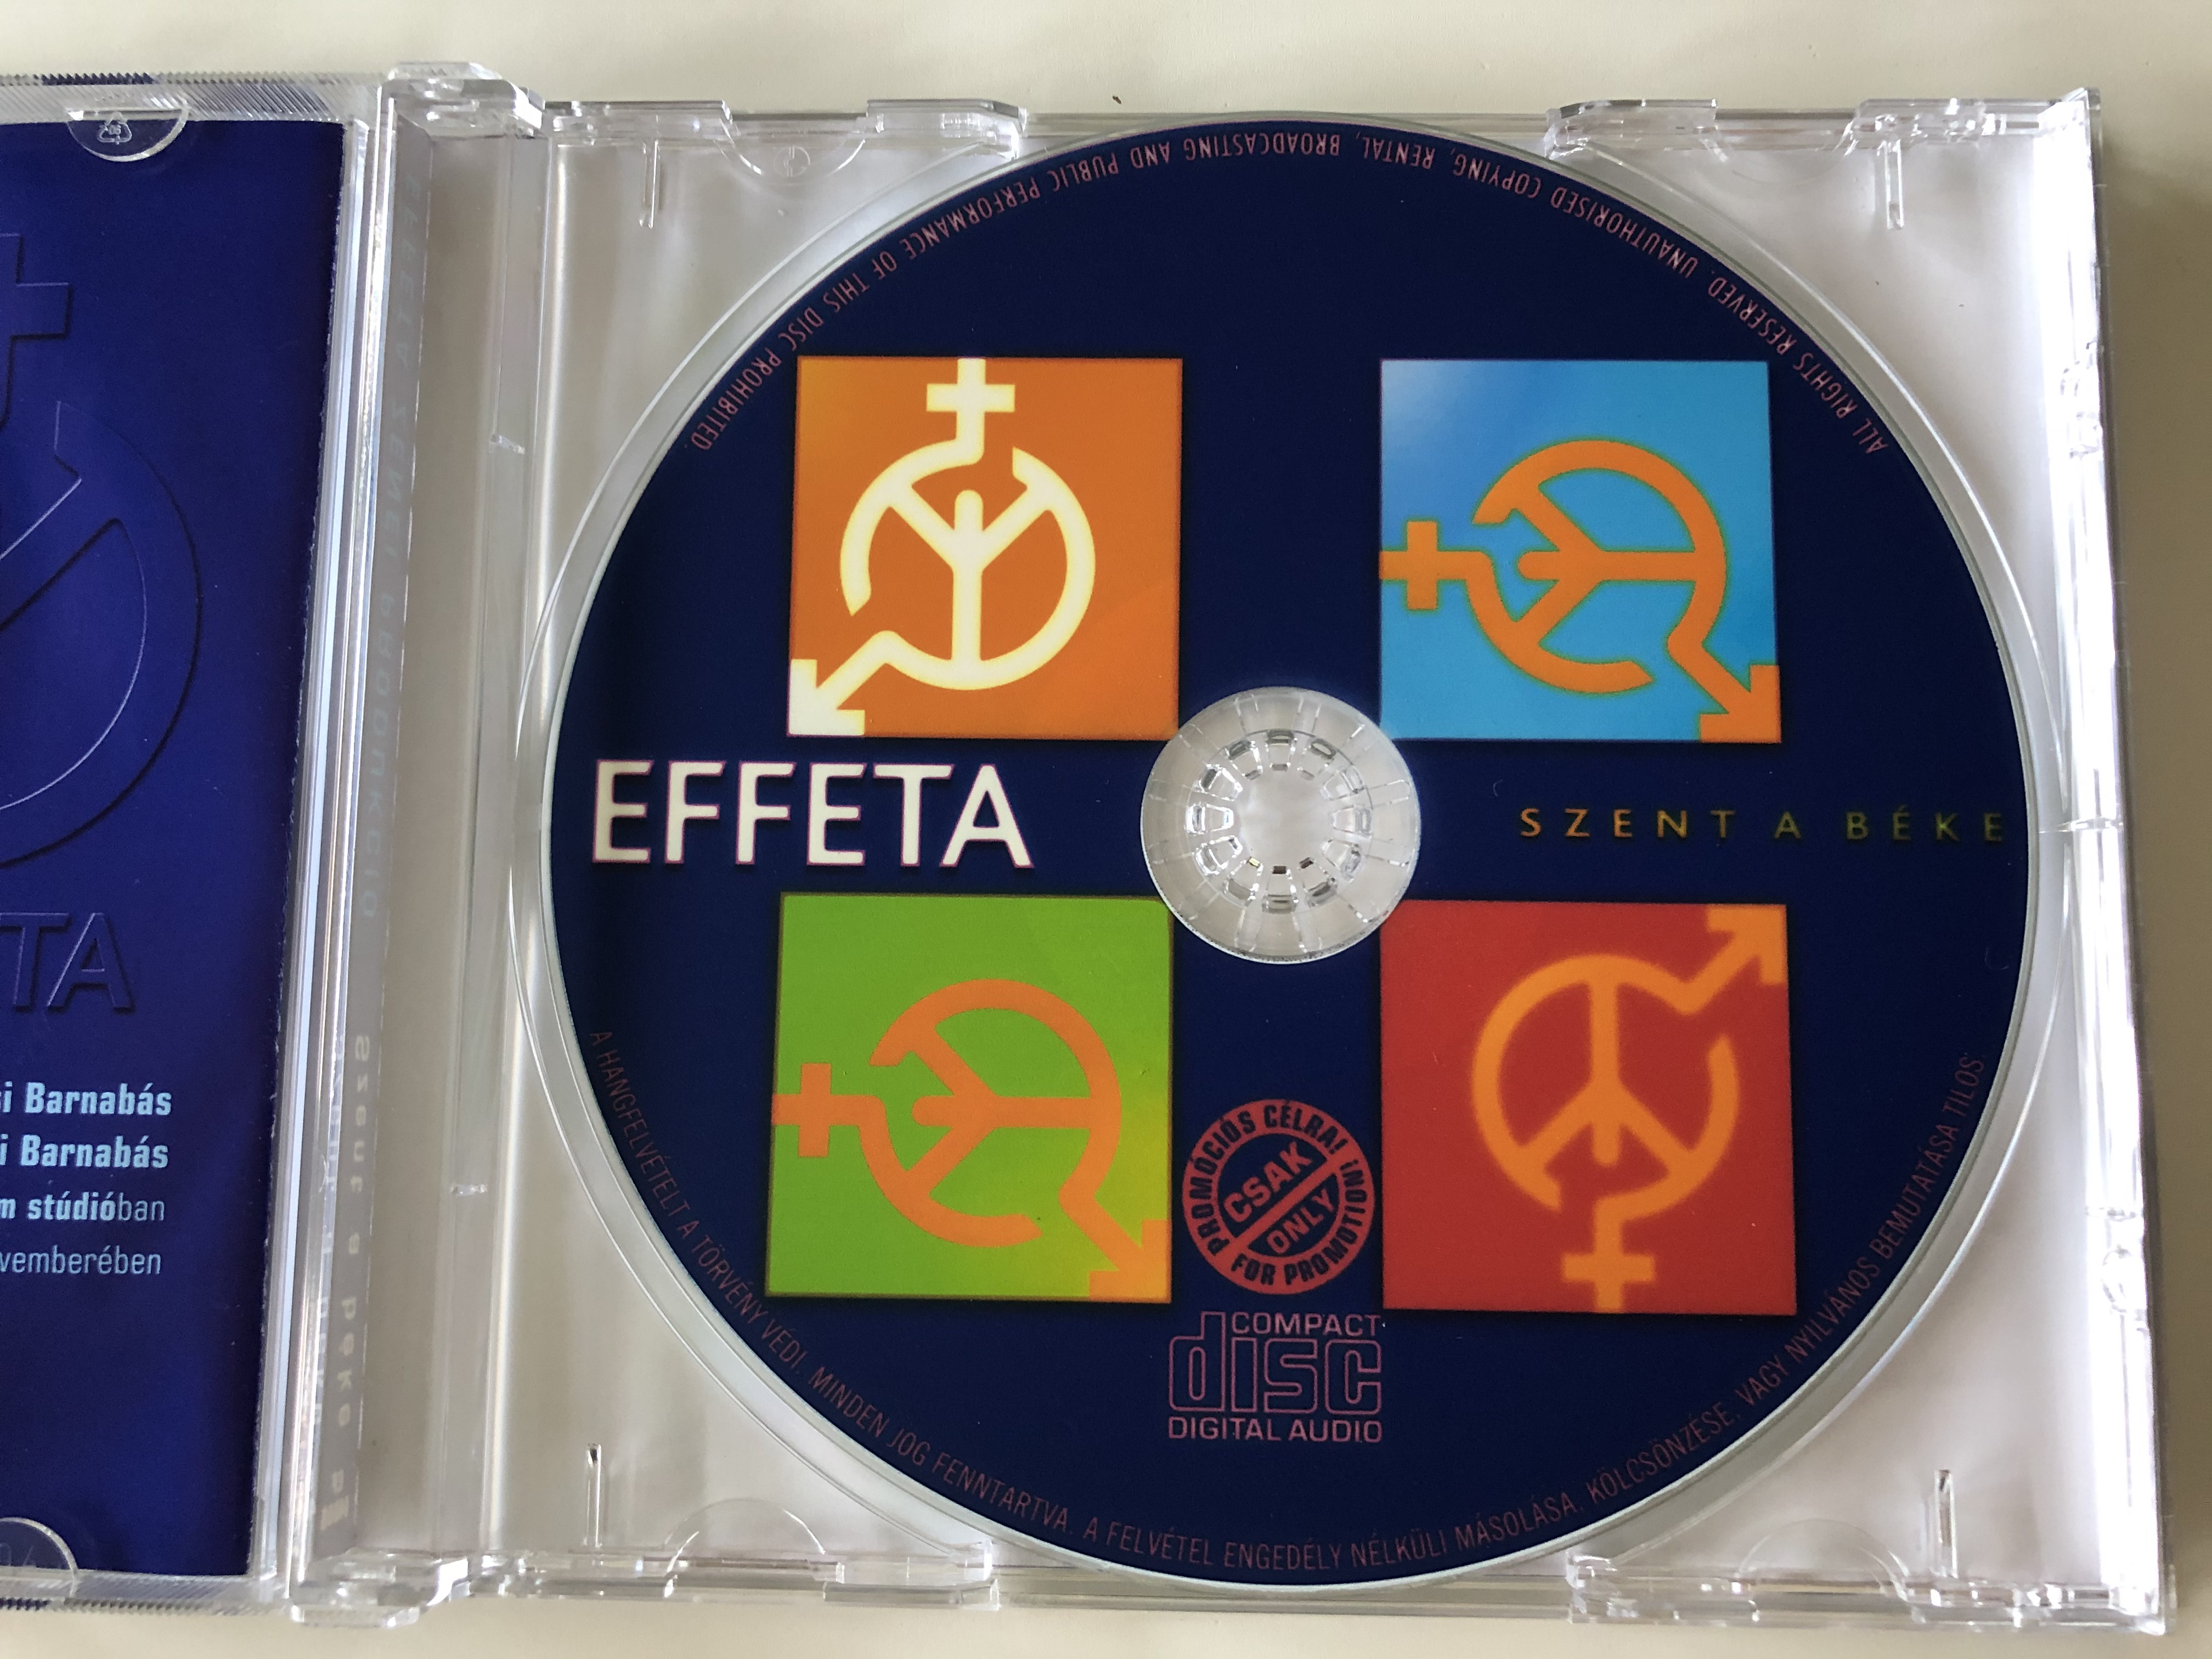 effeta-szent-a-b-ke-magneoton-audio-cd-2008-ef-04008-4-.jpg